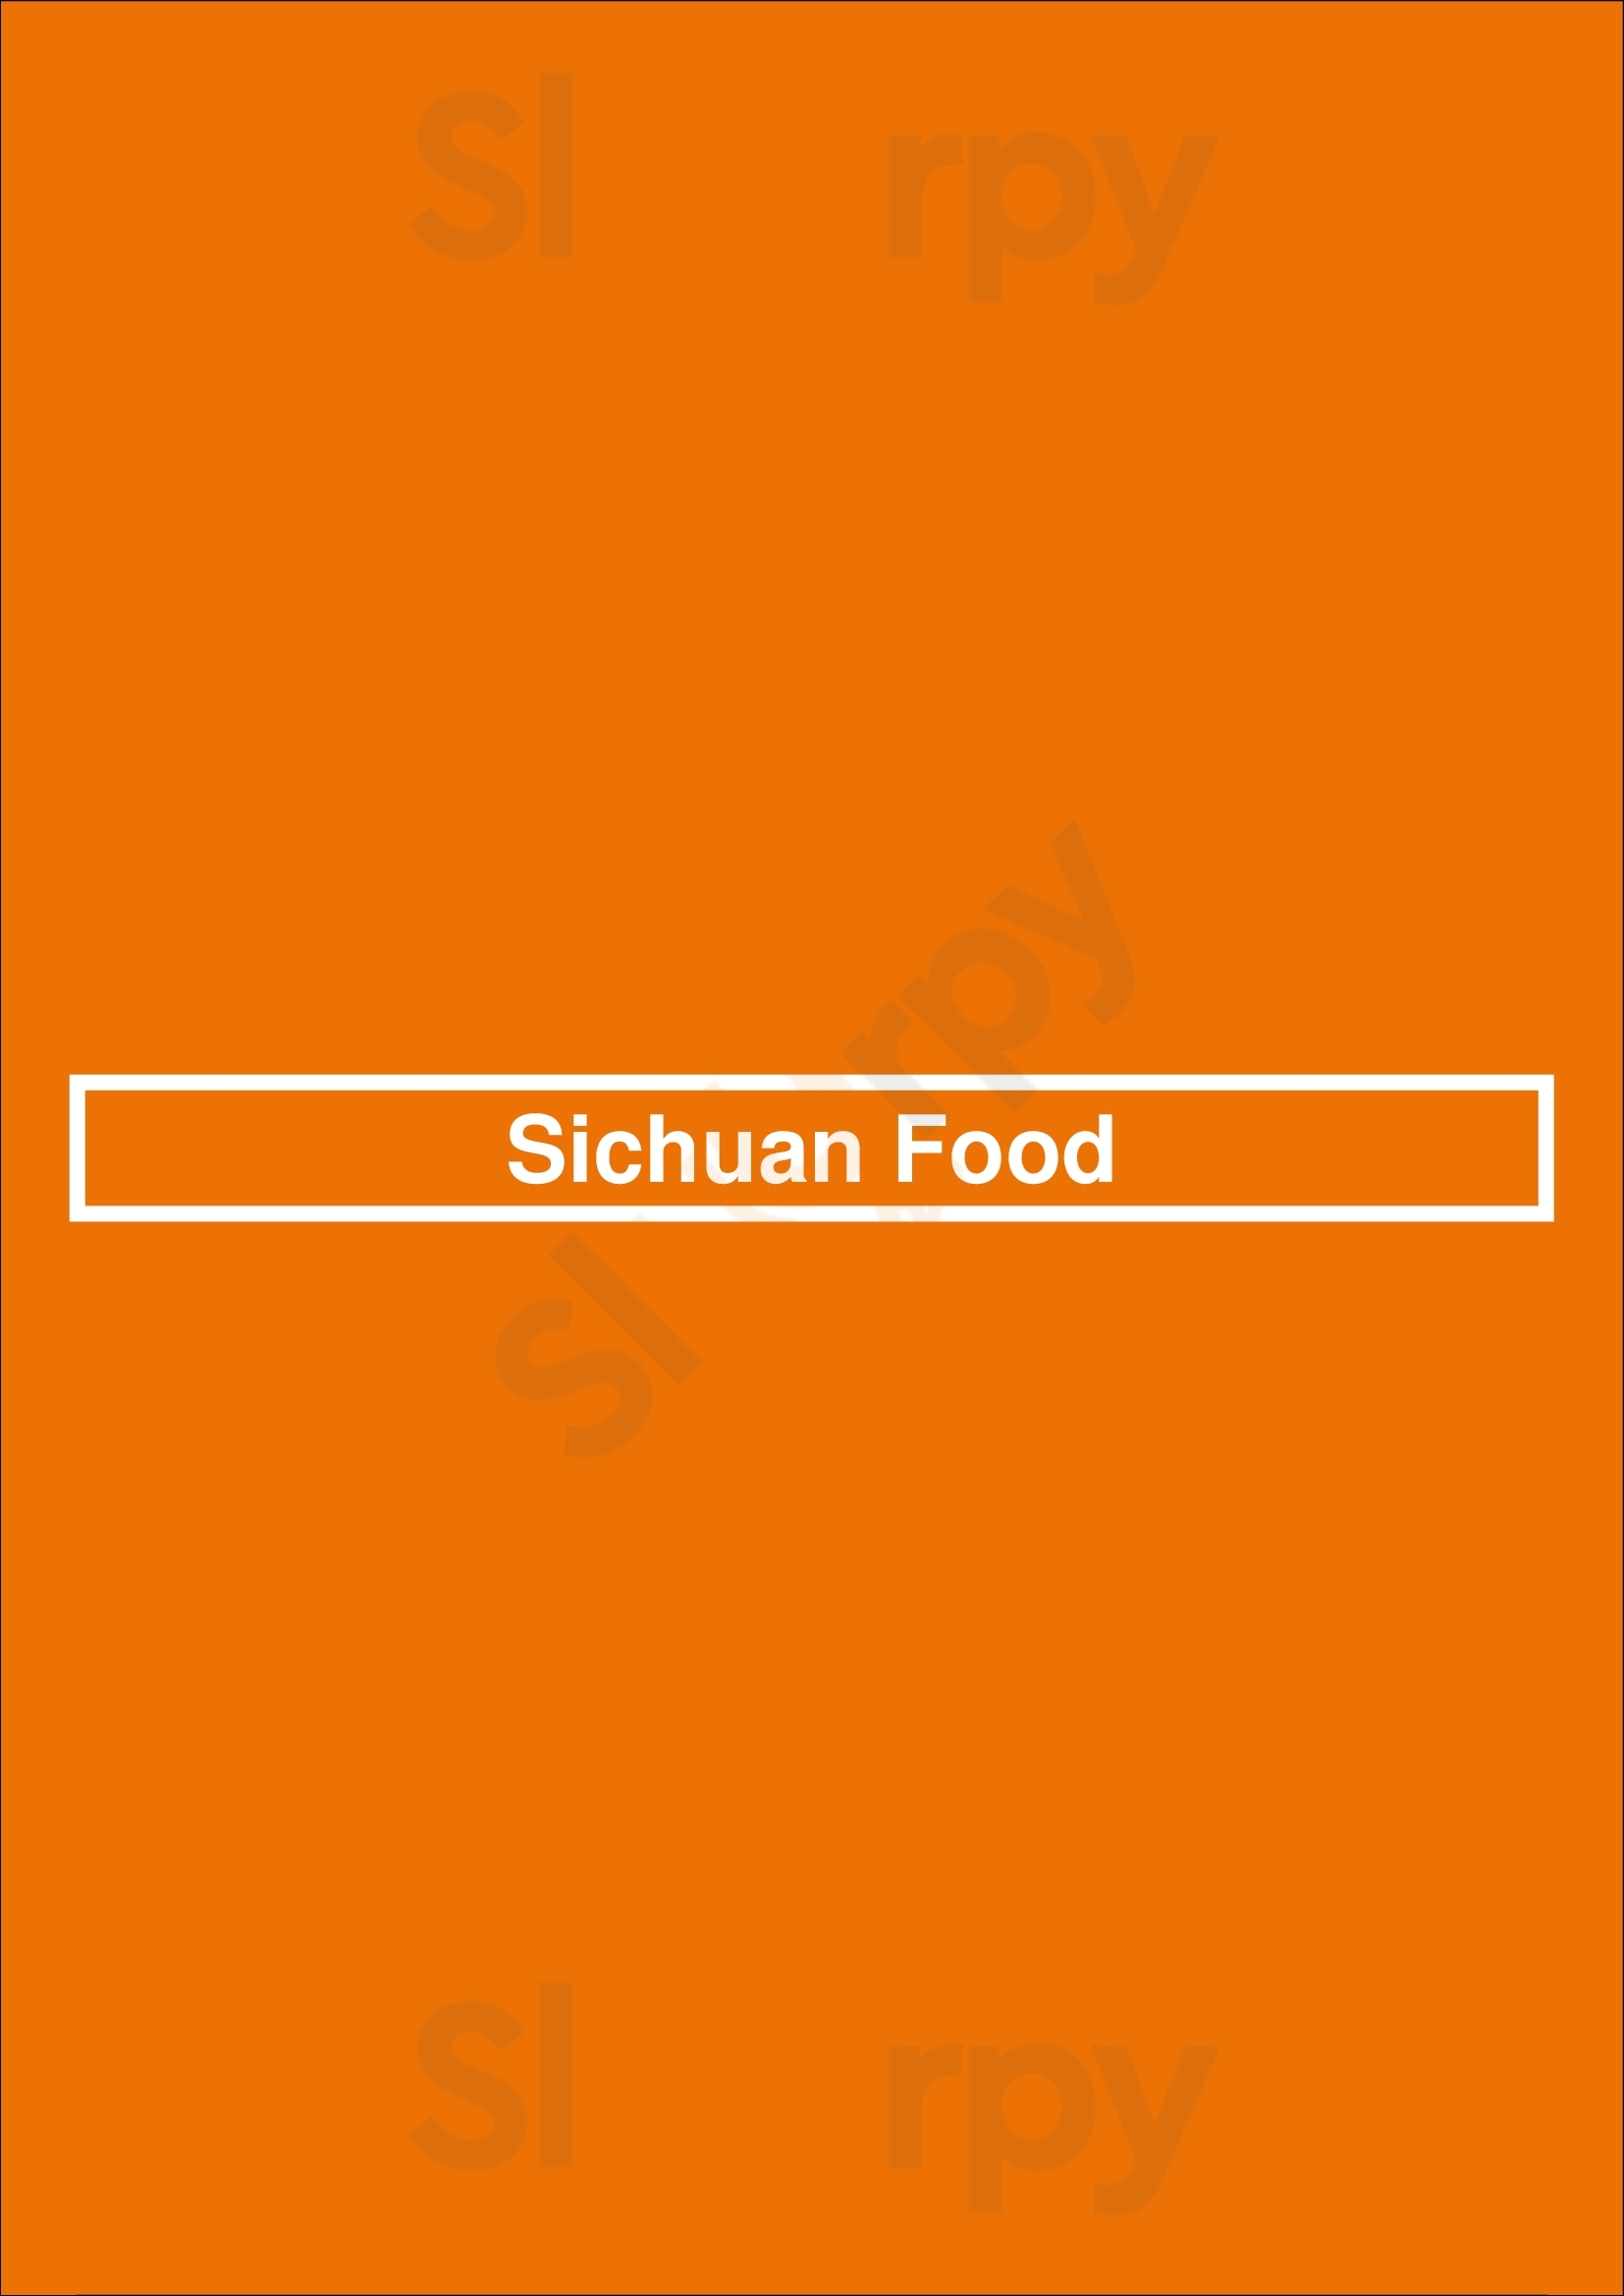 Sichuan Food Amsterdam Menu - 1